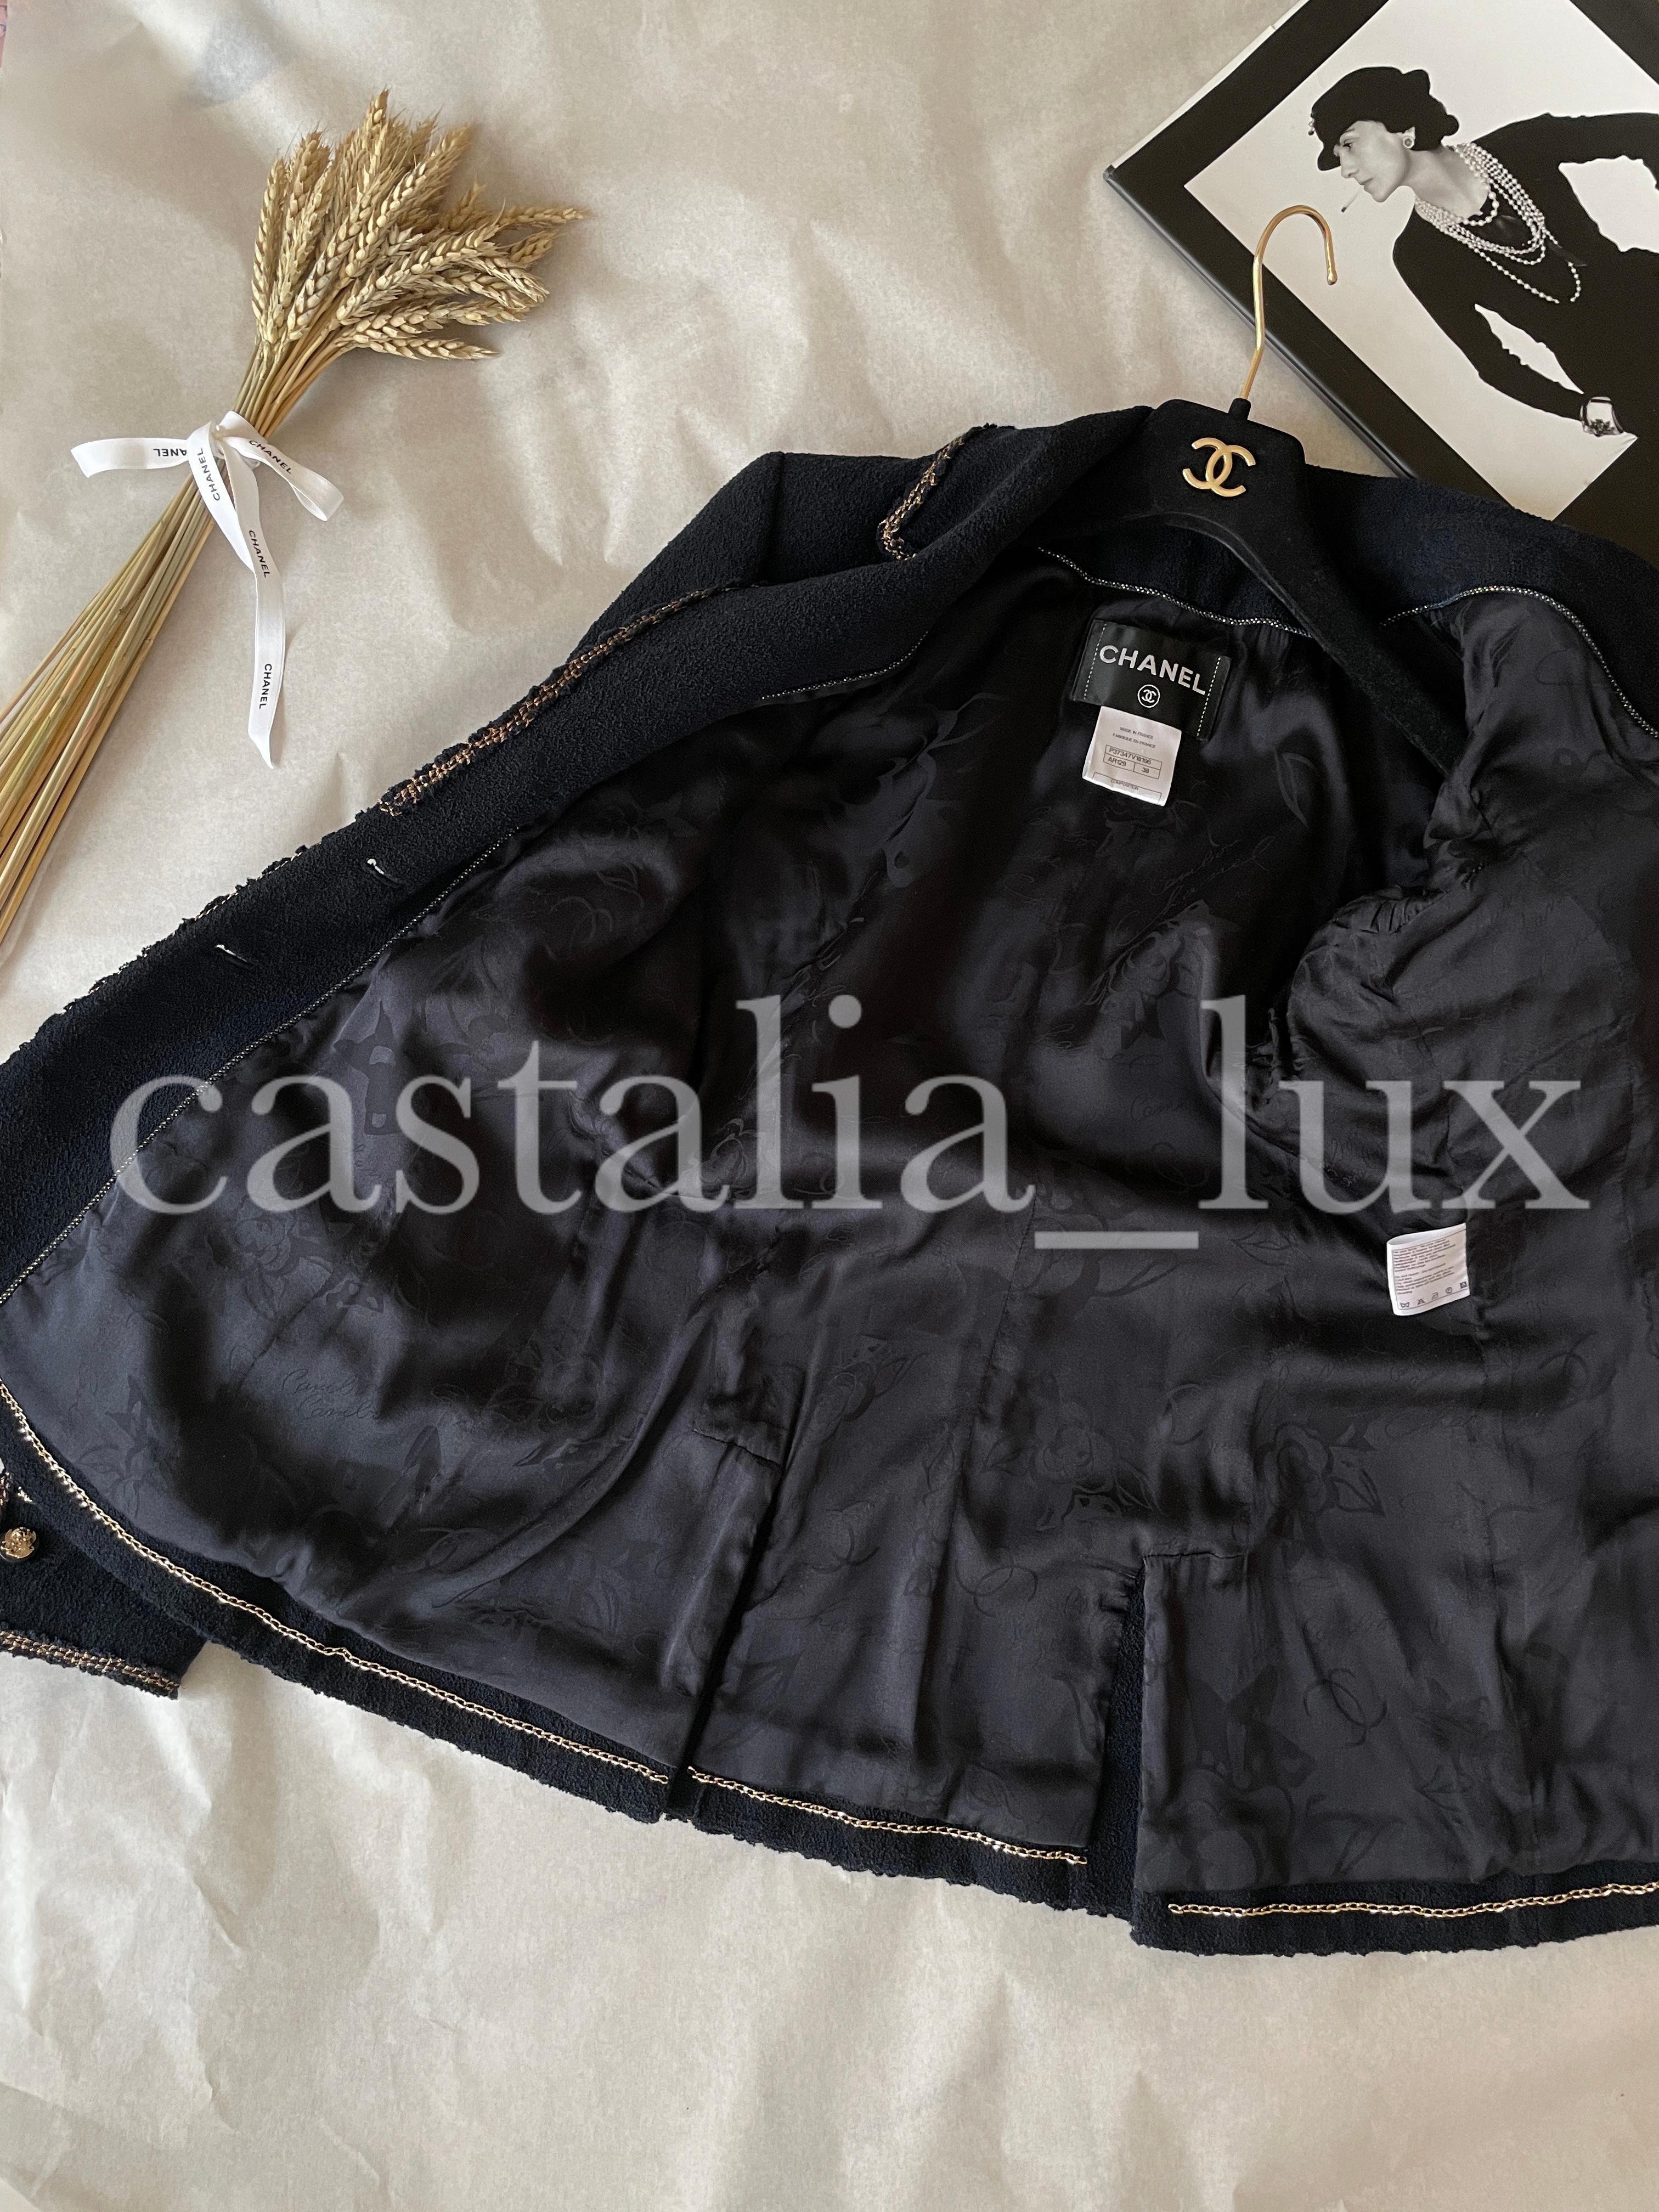 Chanel Iconic Paris / Venice Little Tweed Jacket 6